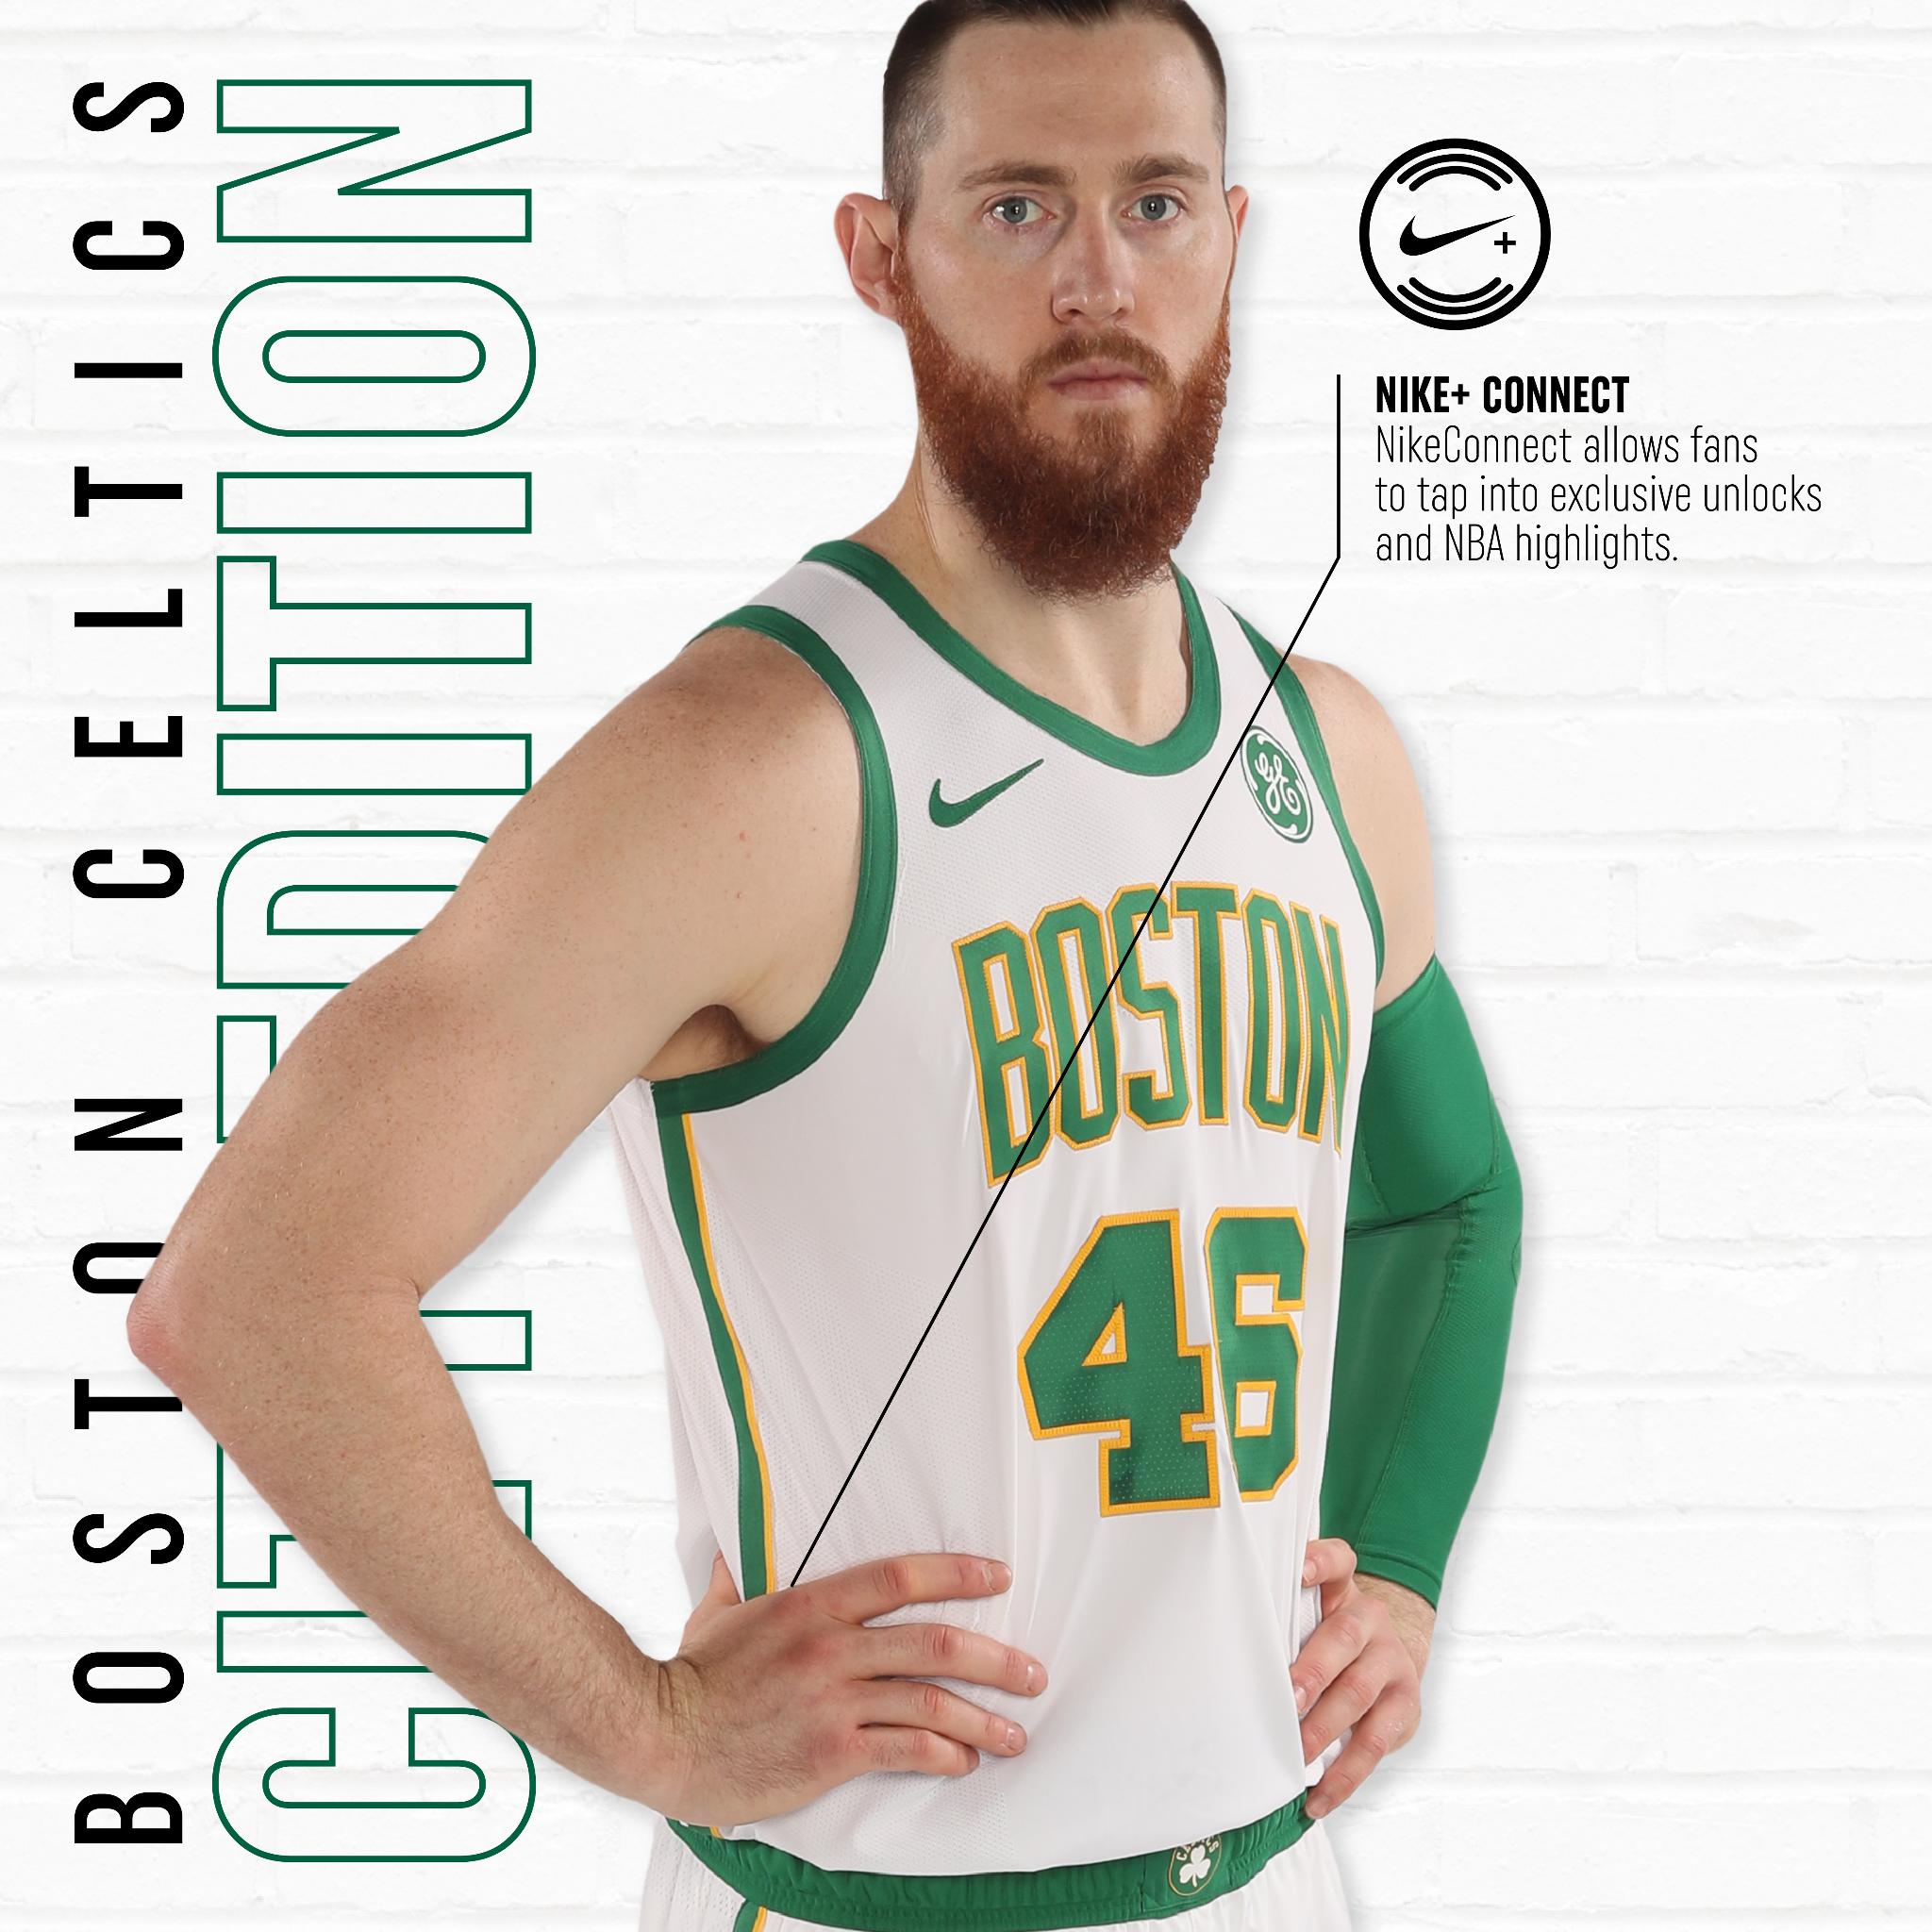 Boston Celtics 2018-19 City Jersey by llu258 on DeviantArt